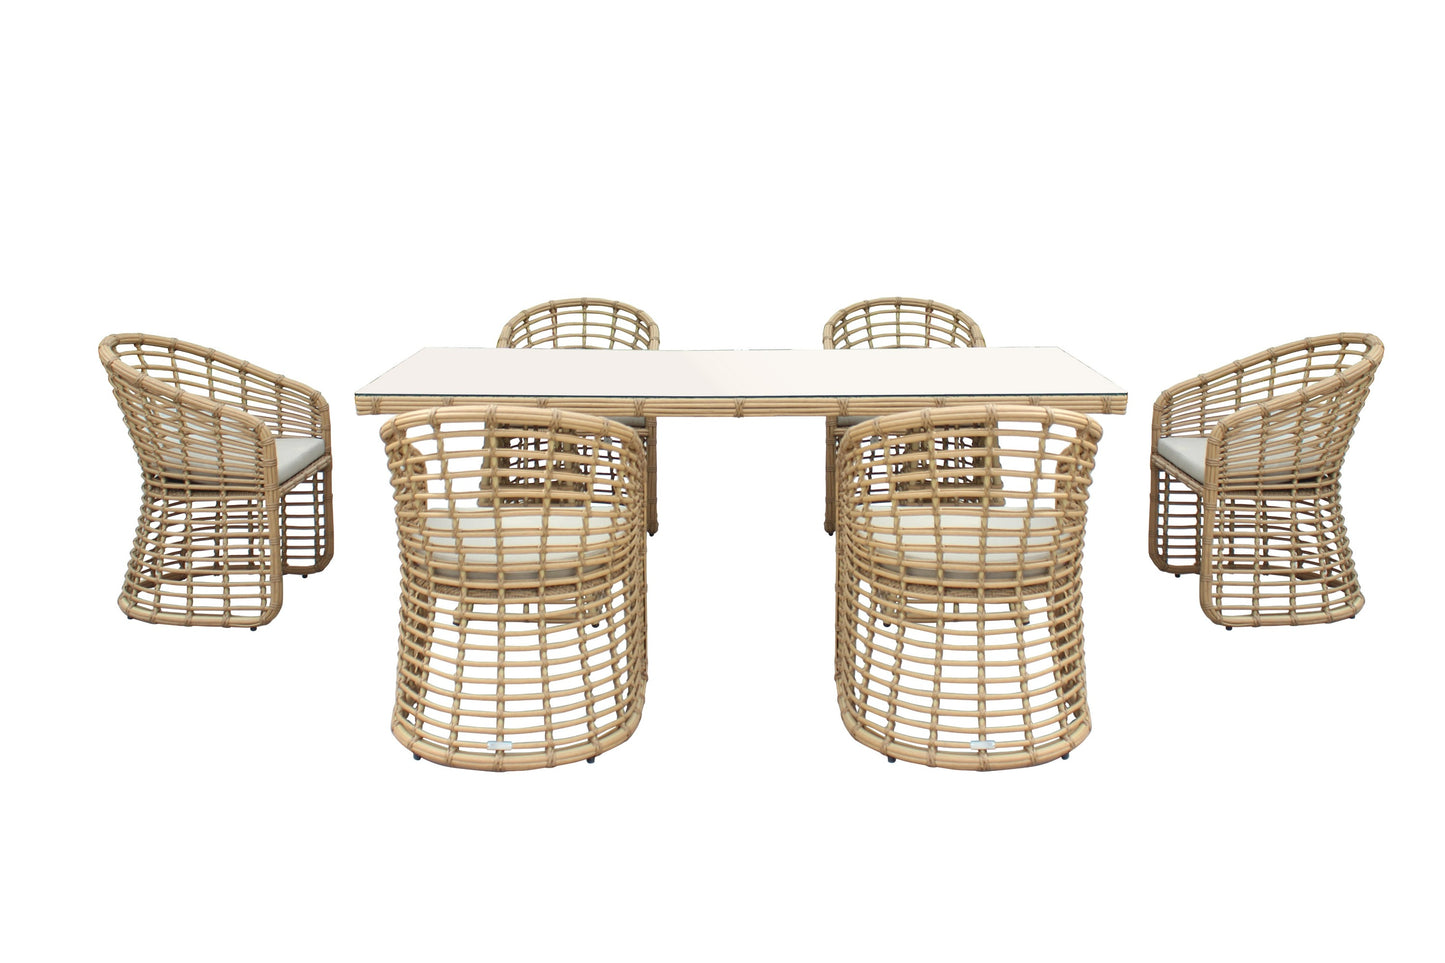 Renava Mina - Outdoor Bamboo Wicker Dining Table Set